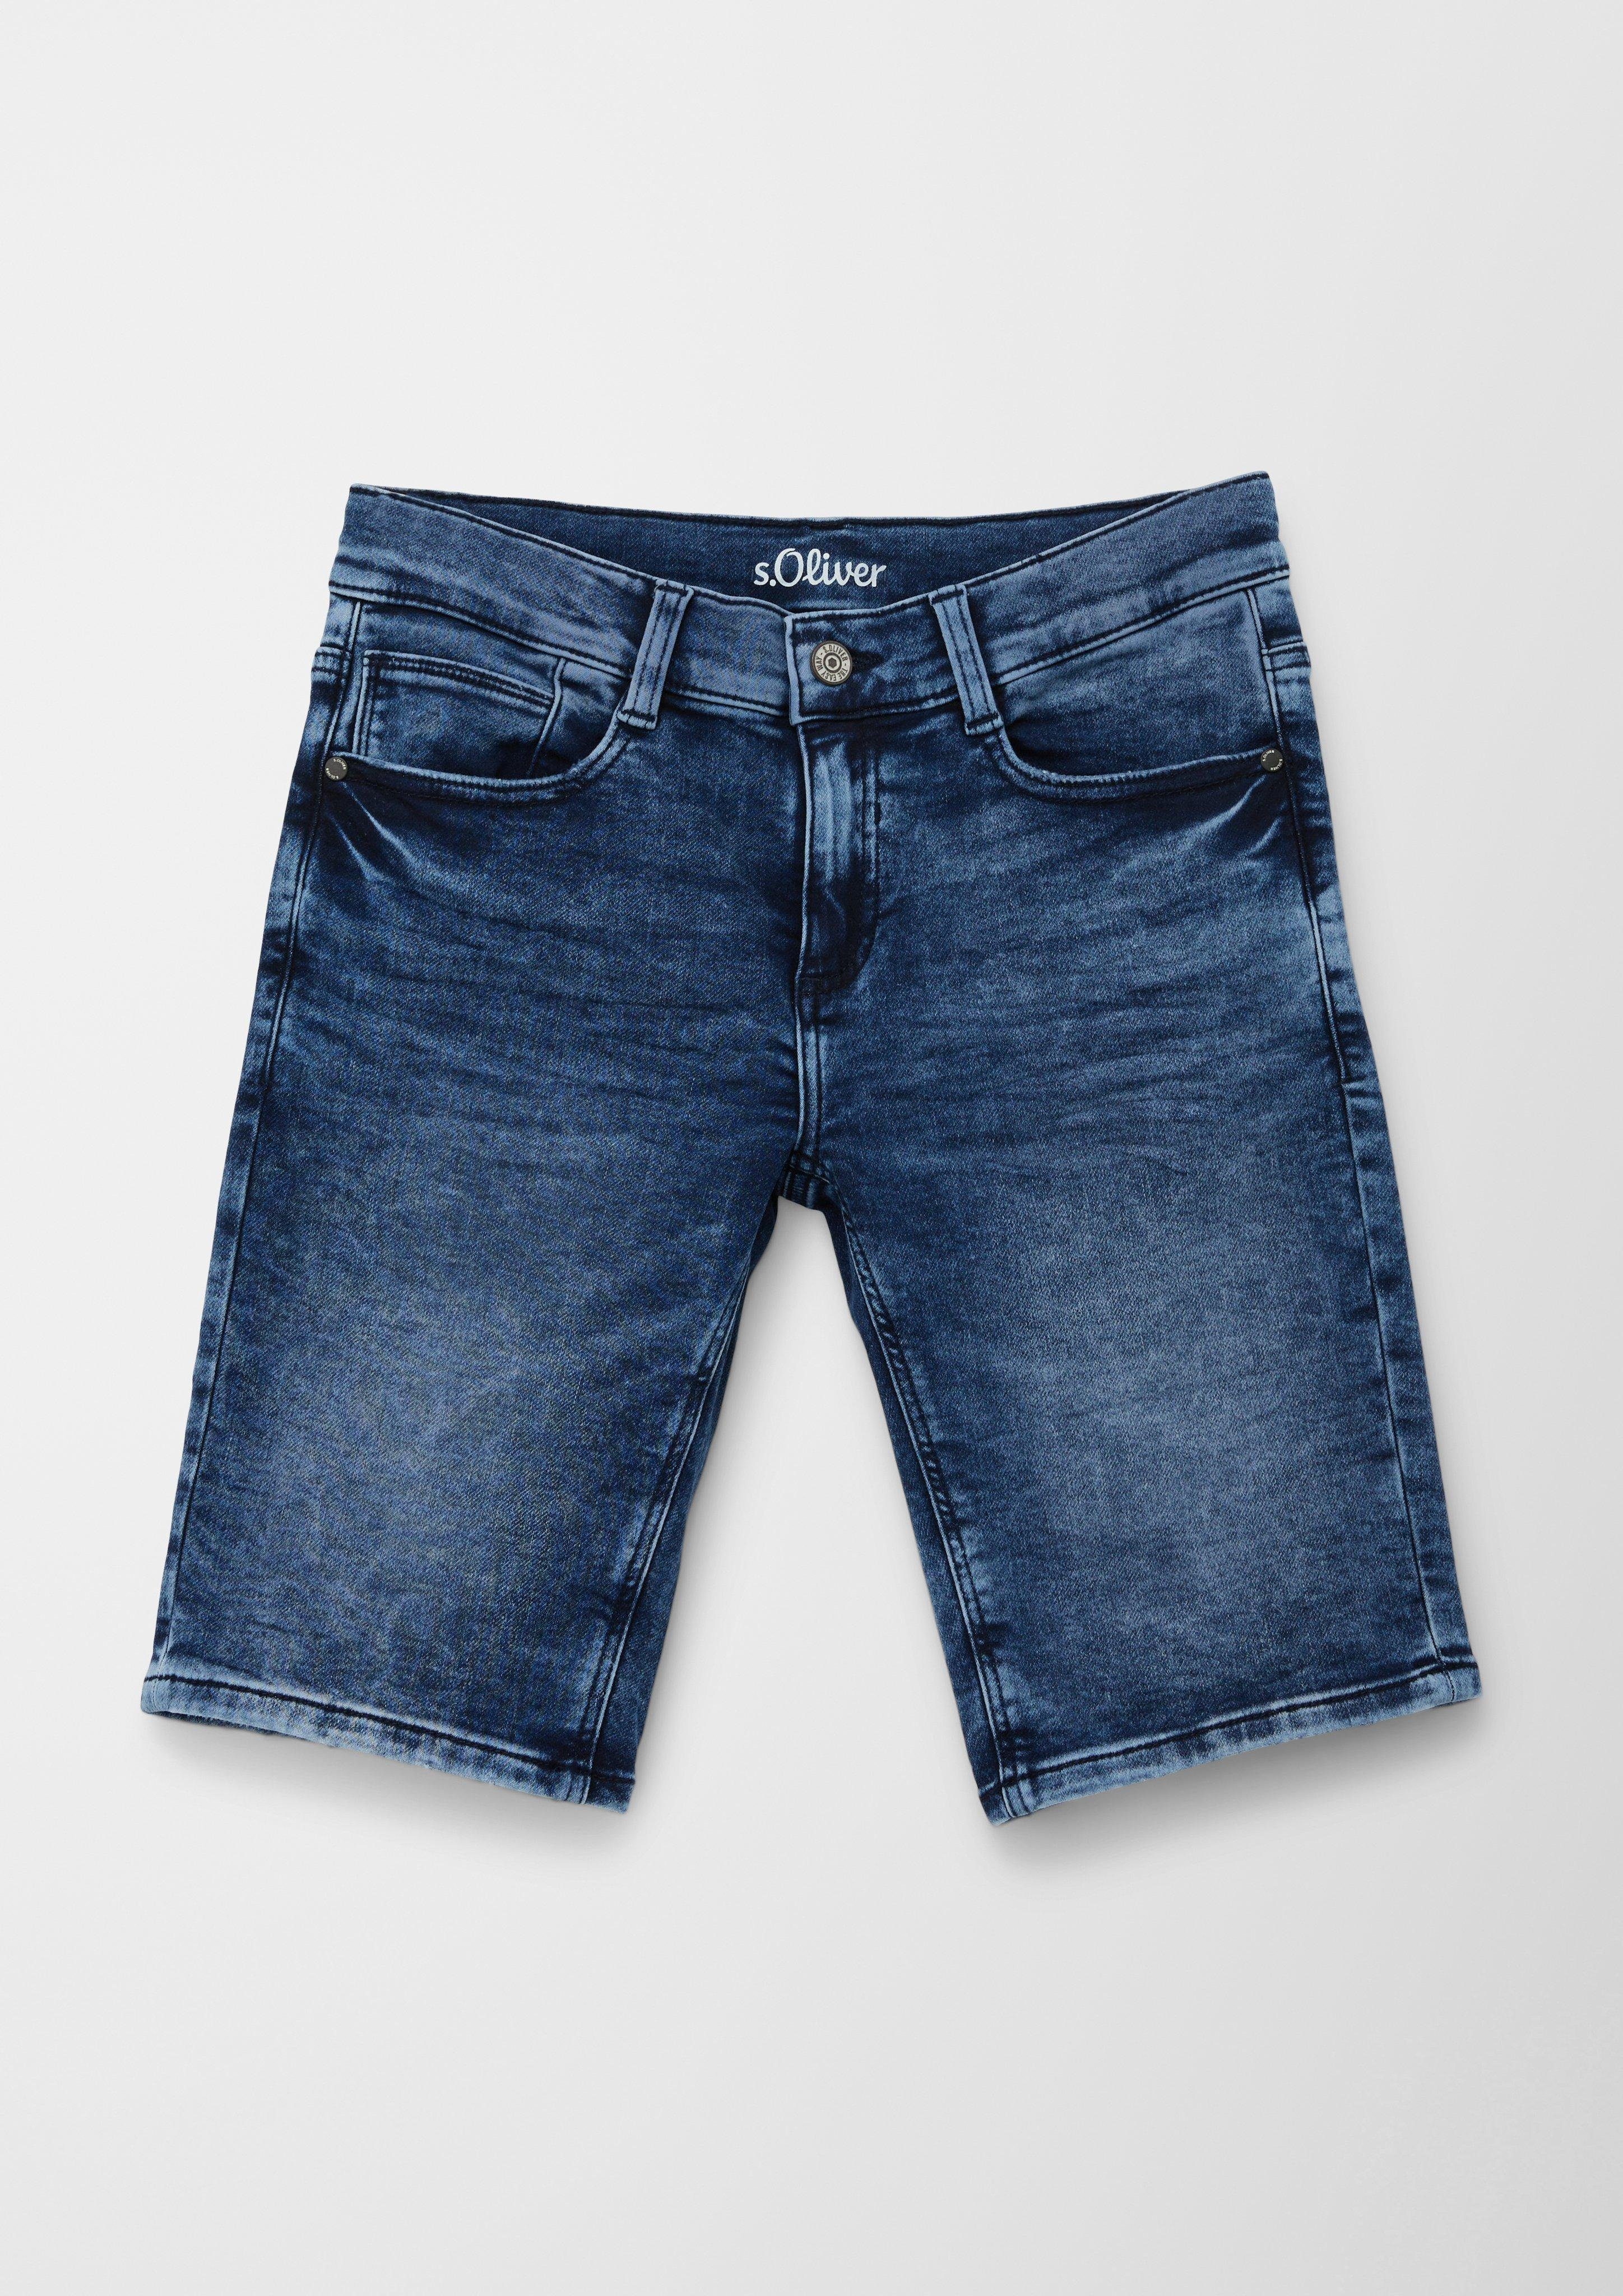 Rise Seattle Jeans-Bermuda Leg Fit Slim s.Oliver Waschung, Mid Destroyes Regular Jeansshorts / / /